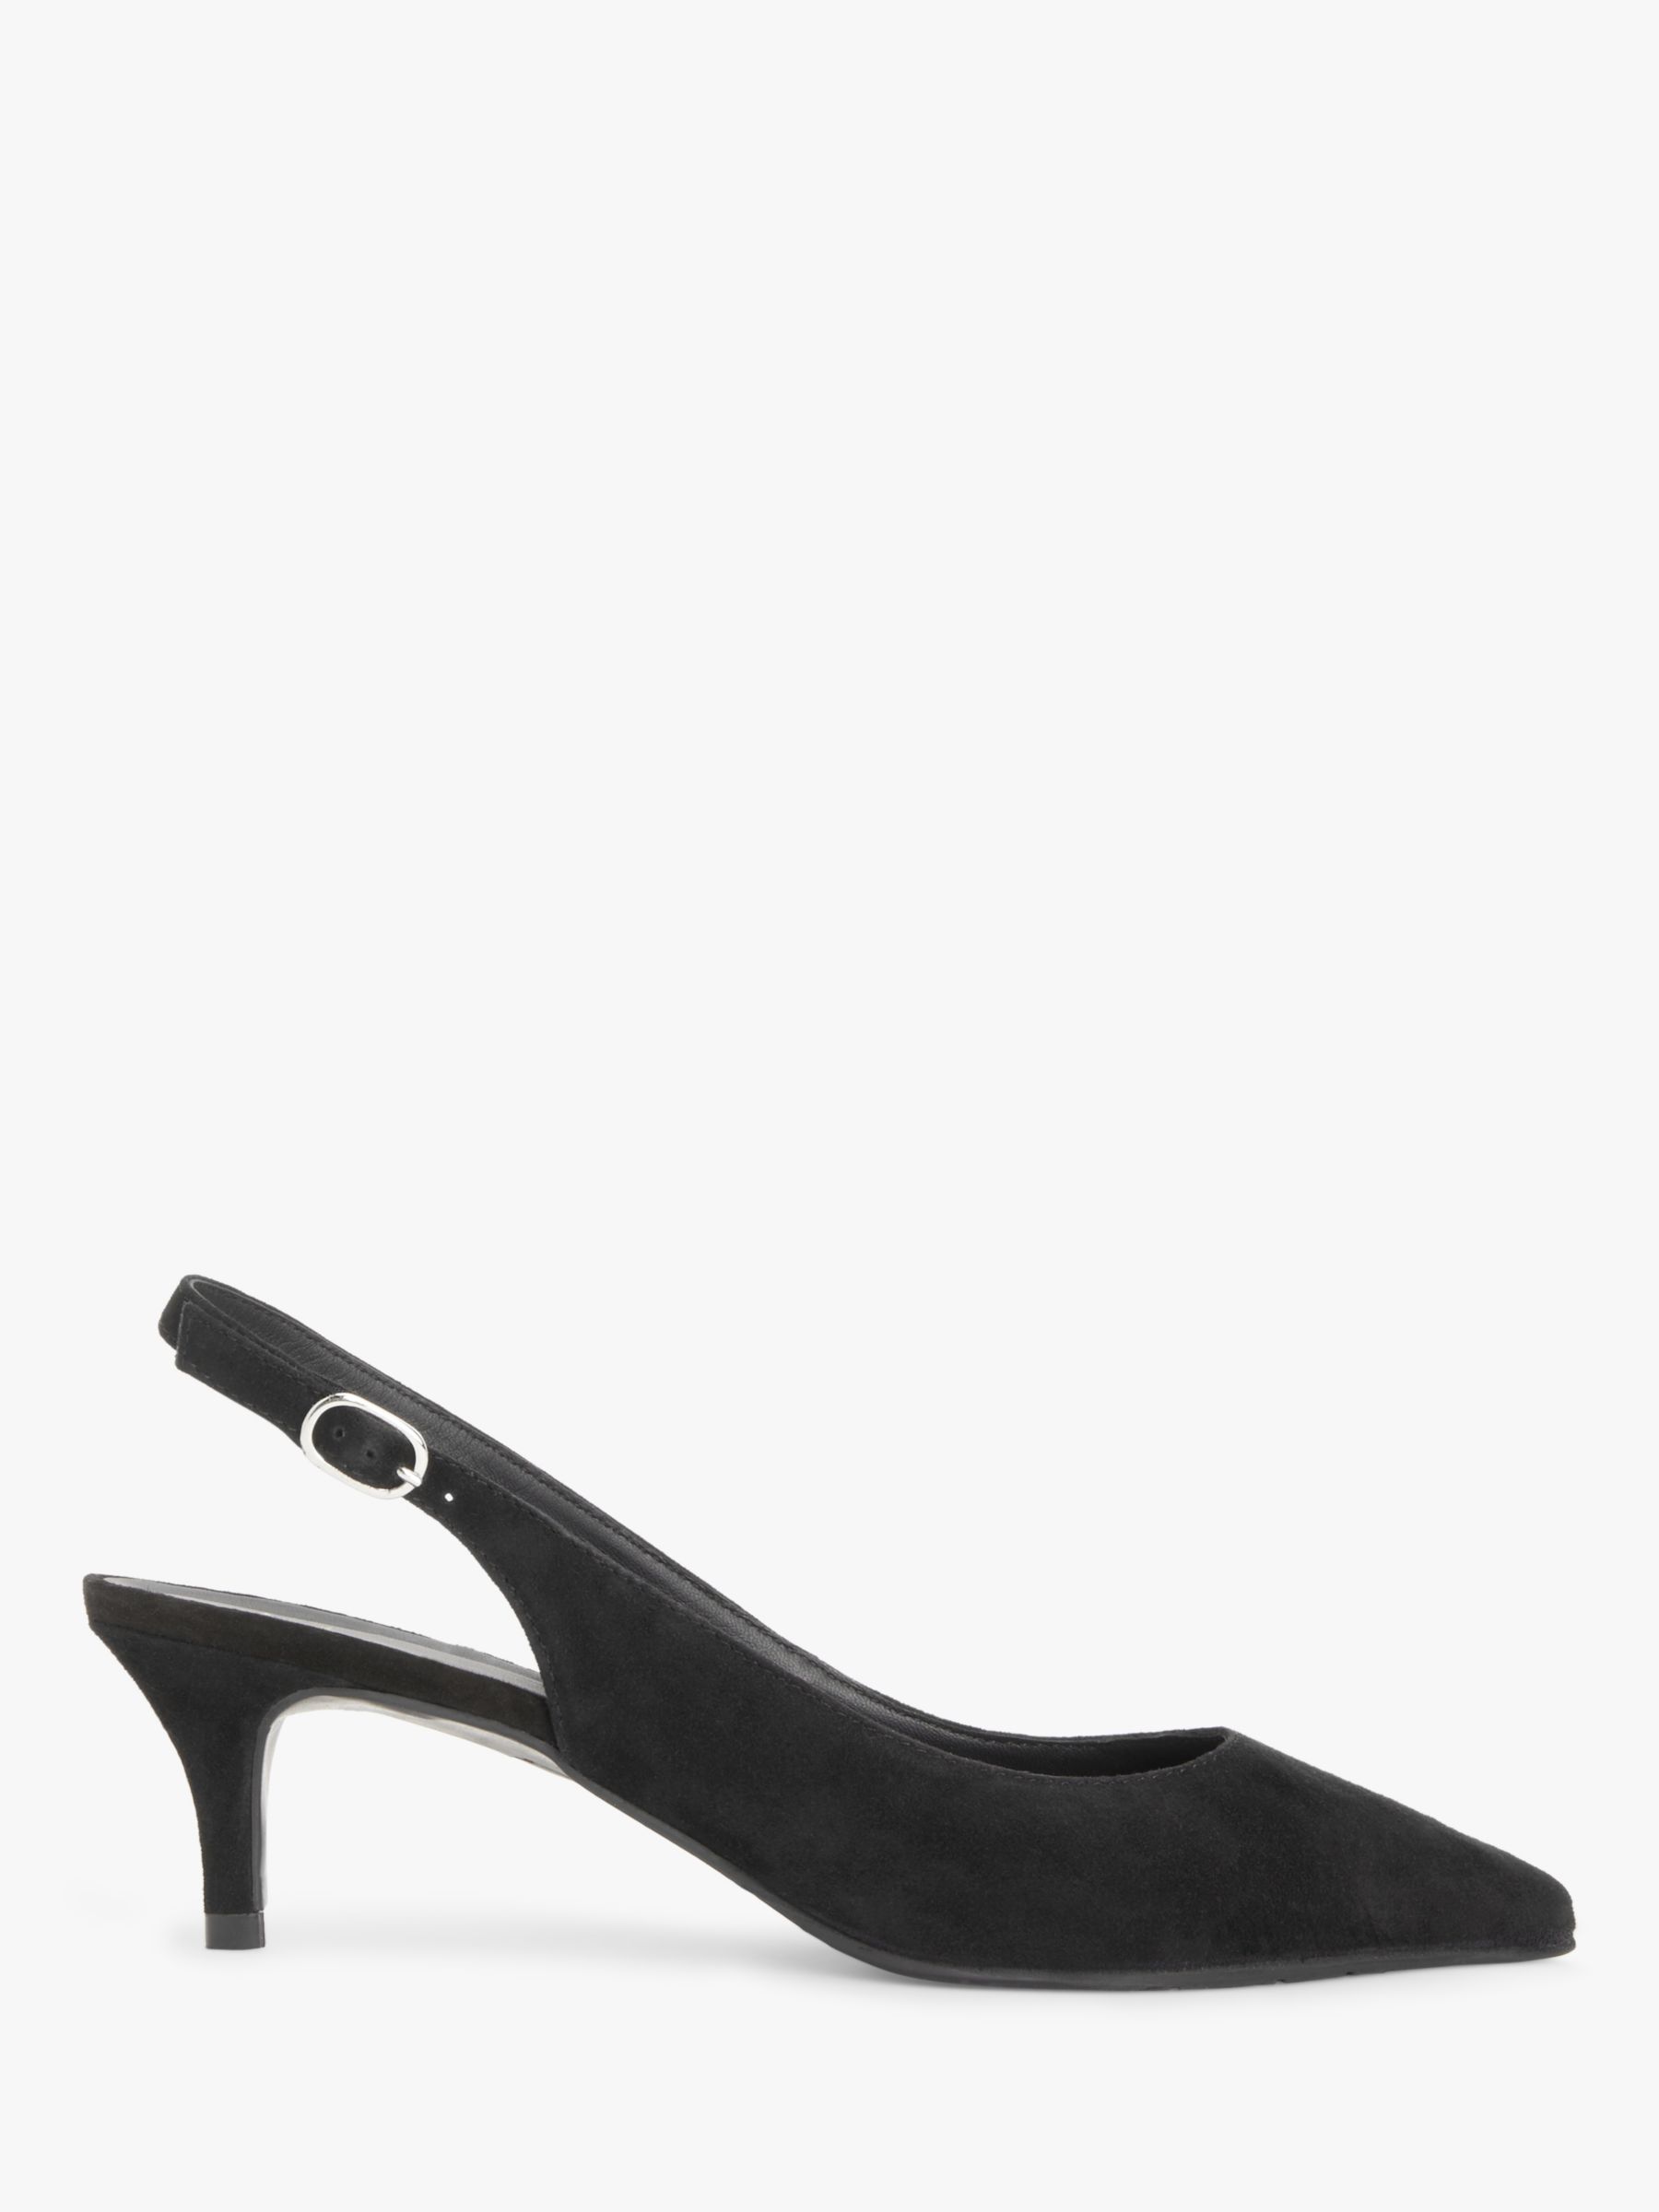 John Lewis Greece Kitten Heel Slingback Court Shoes, Black Suede, 6